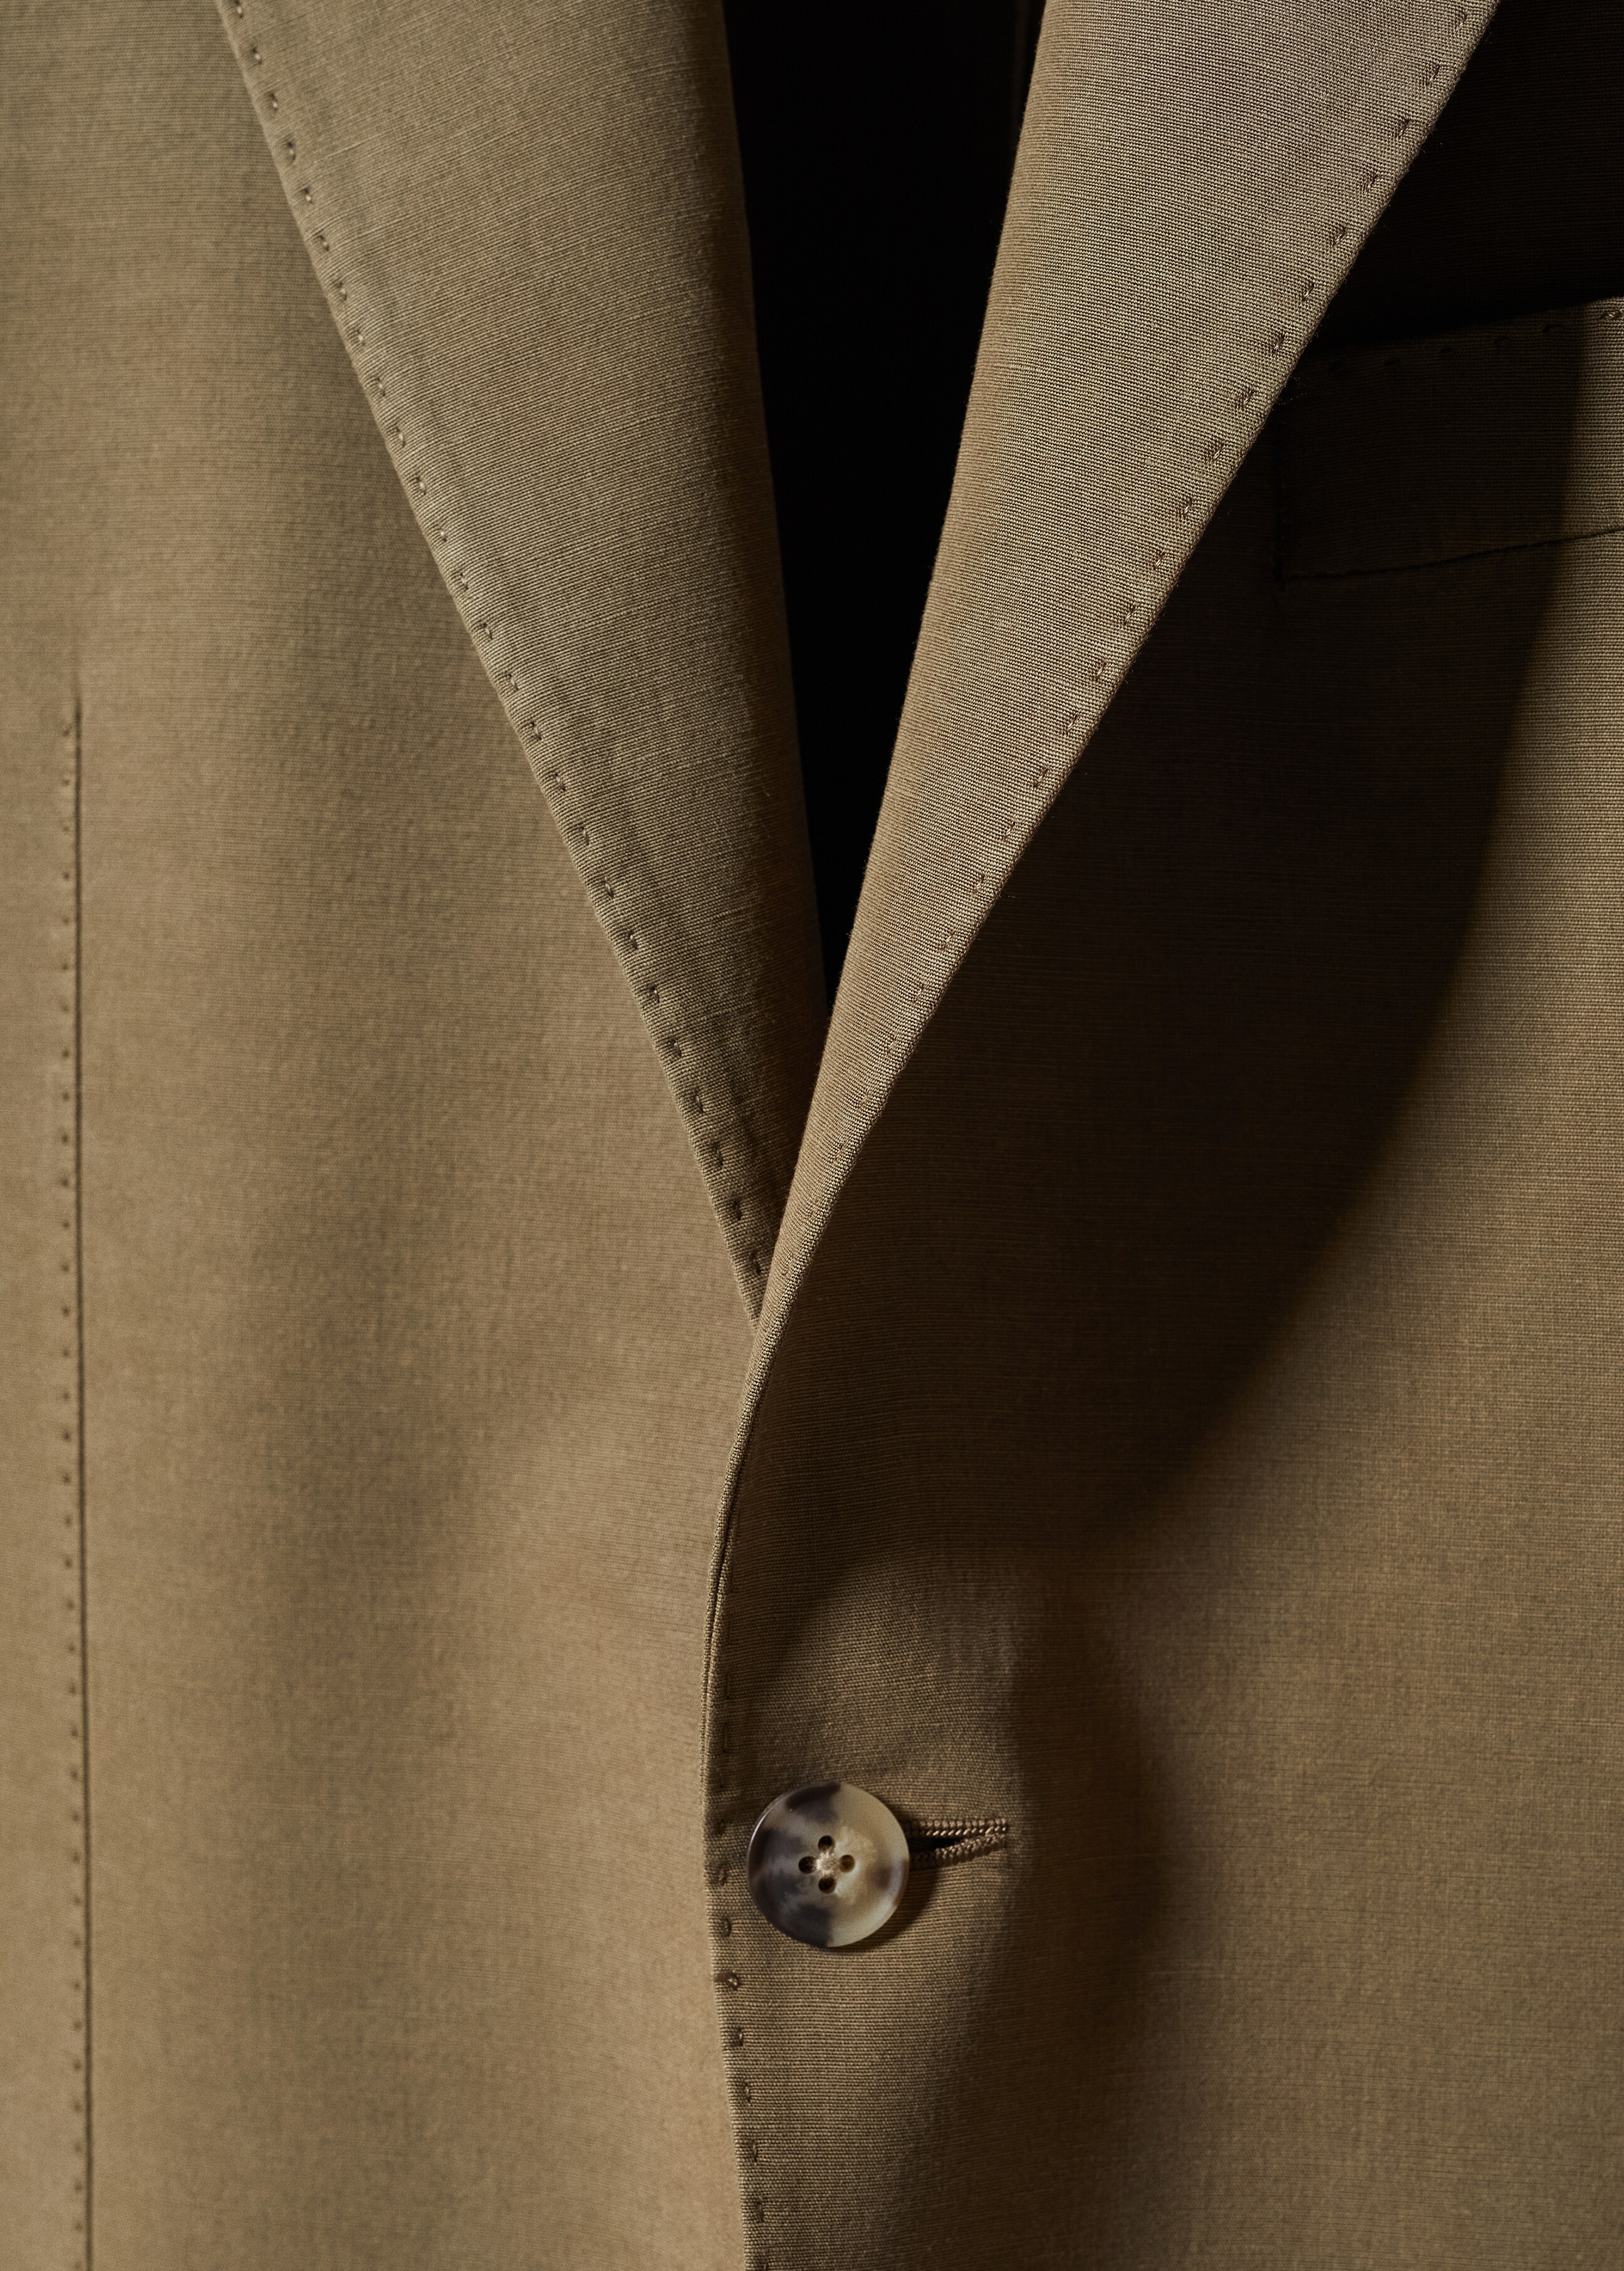 Slim fit cotton blazer - Details of the article 8